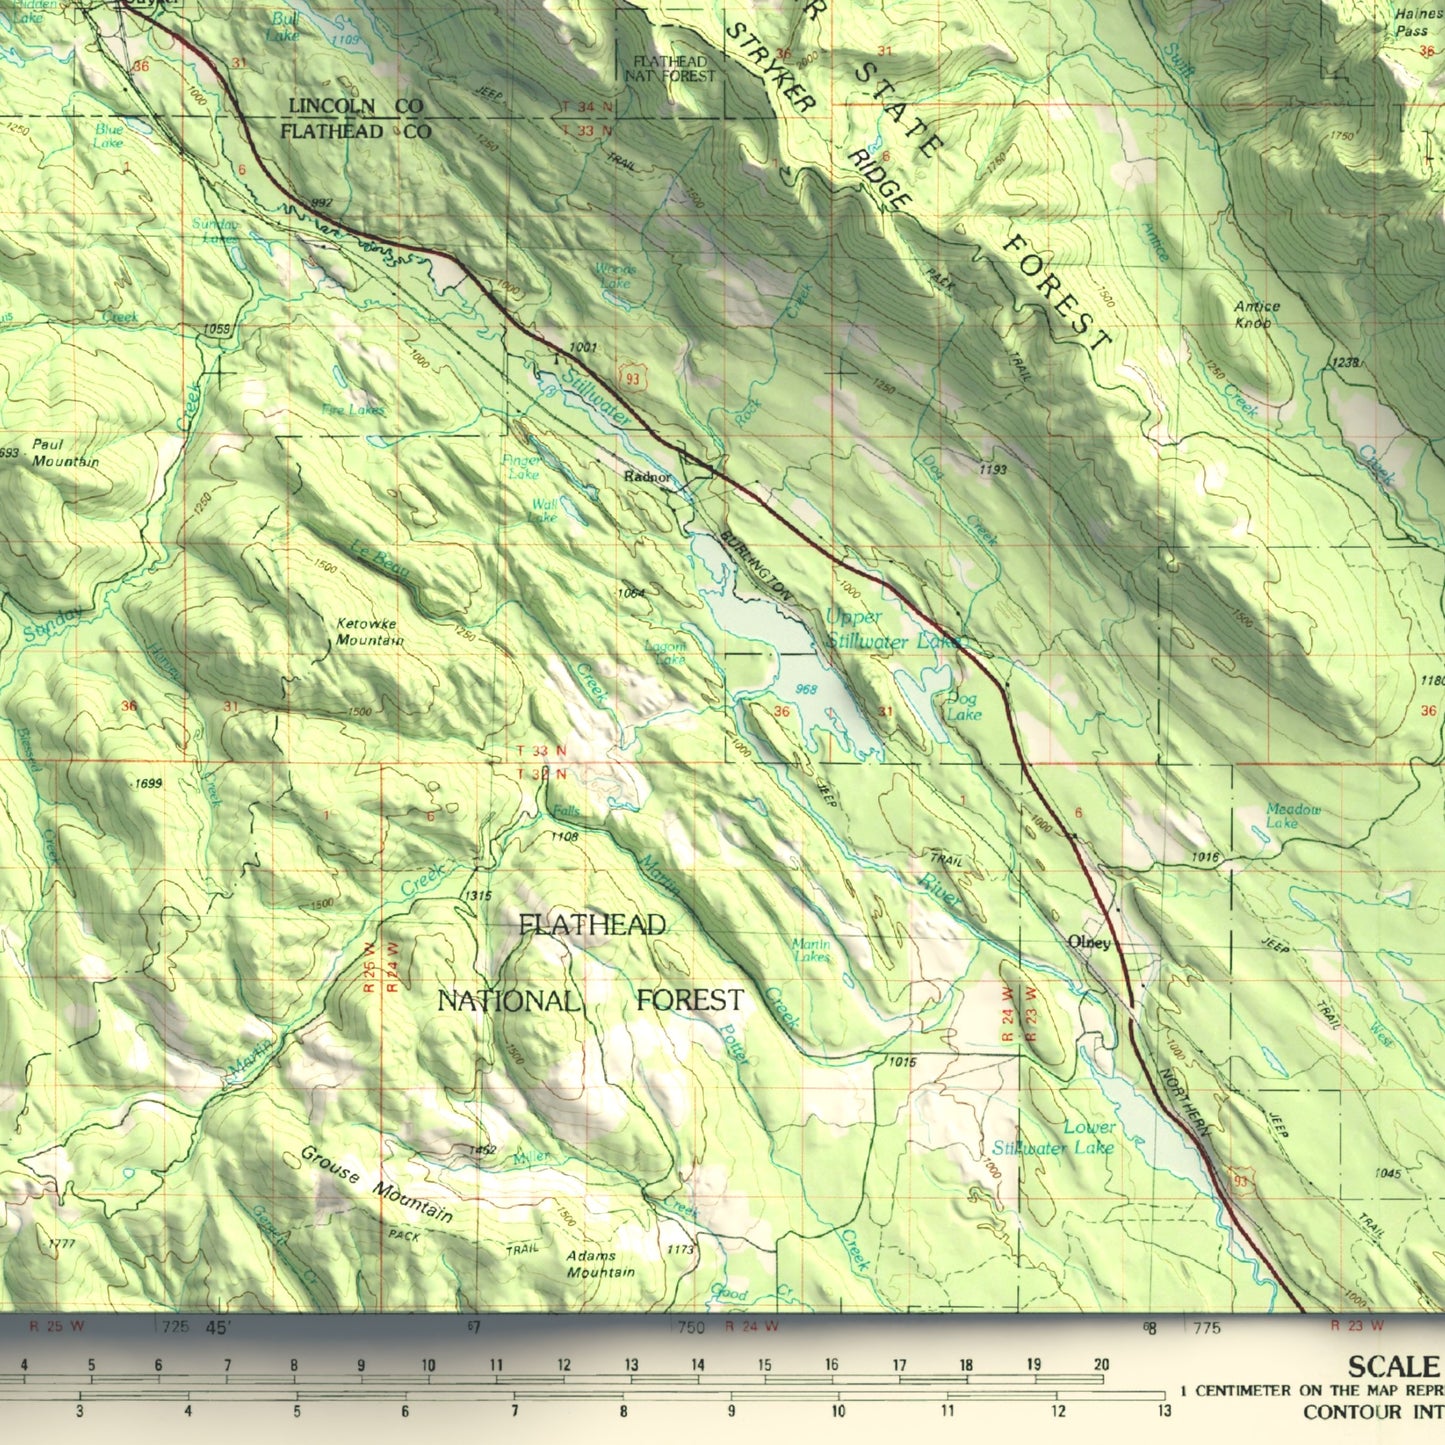 1981 Whitefish Range, MT | 30'x60' Shaded Historic USGS Map